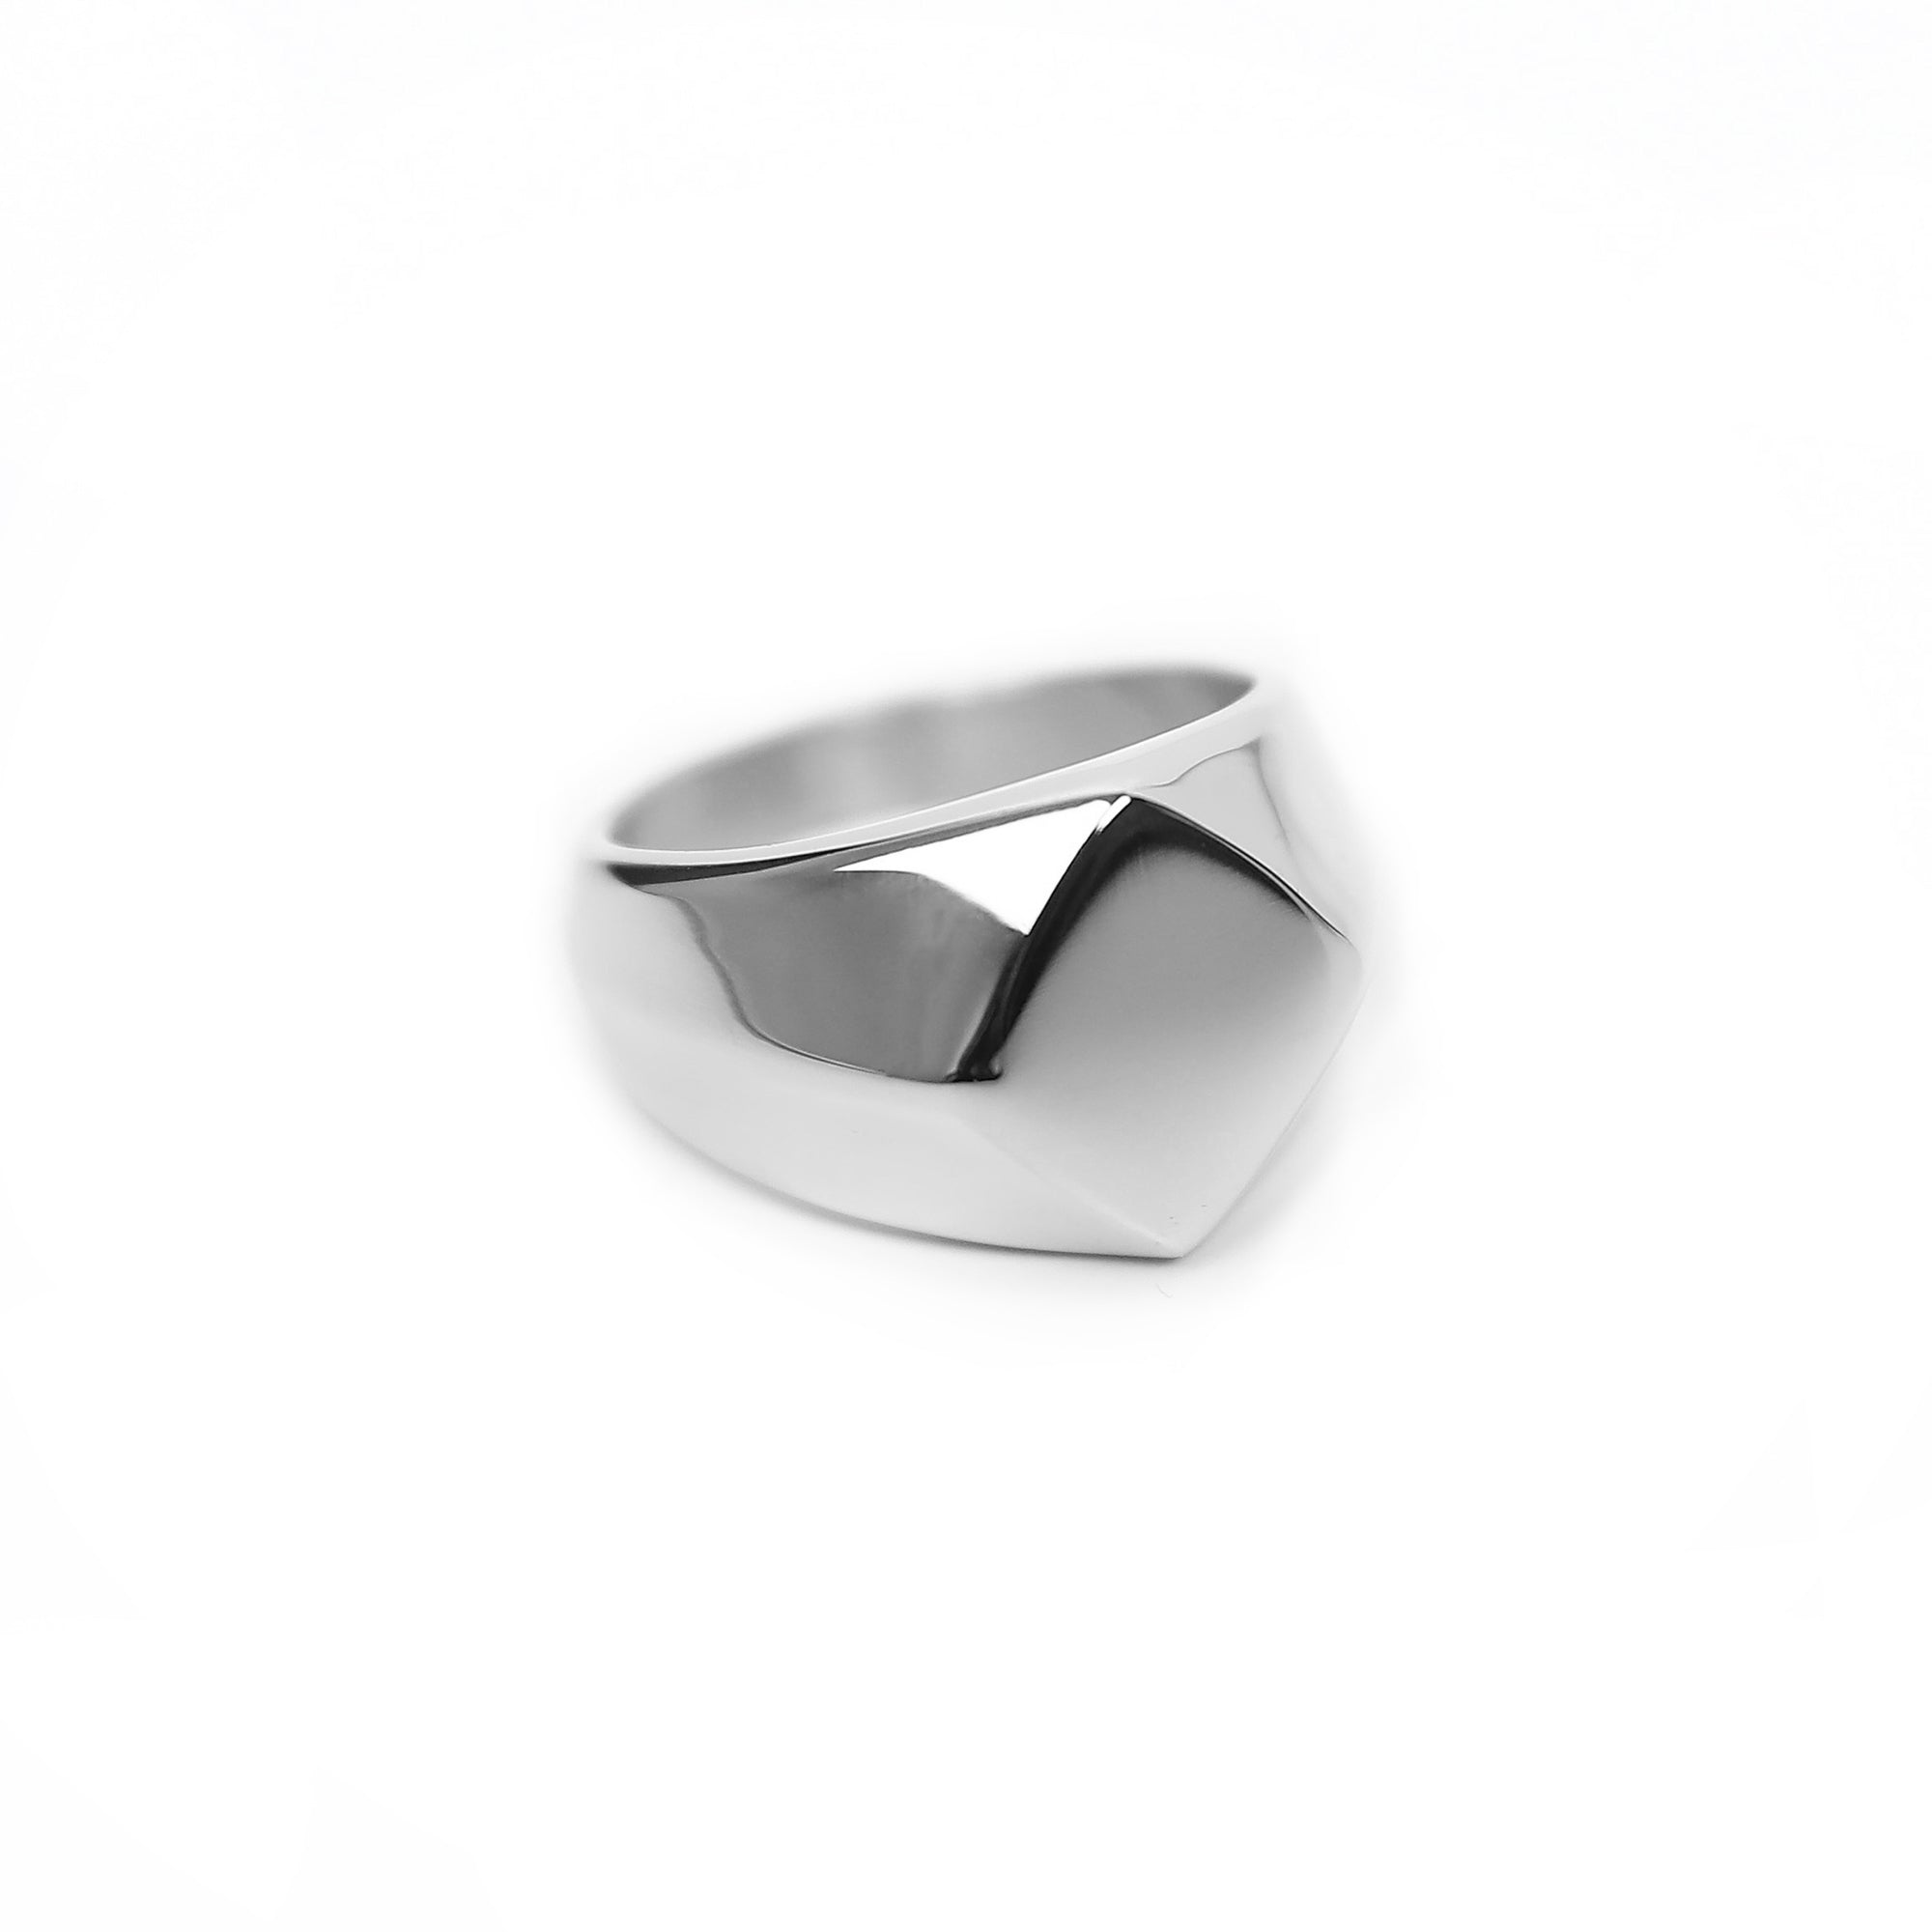 Solar Ring - Silver